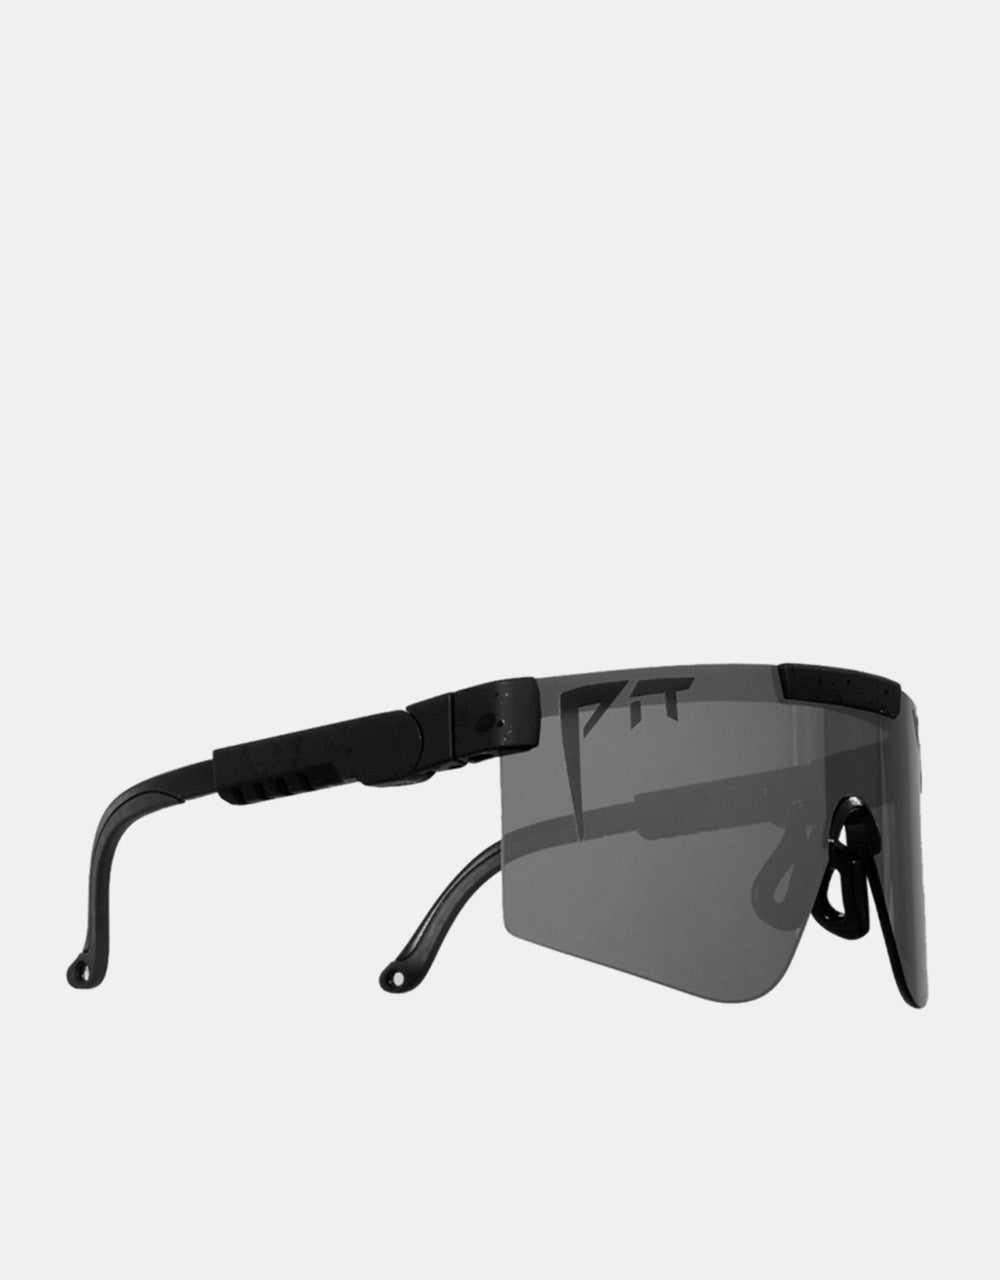 Pit Viper The Blacking Out Polarized 2000s Sunglasses Black/Grey Polarized